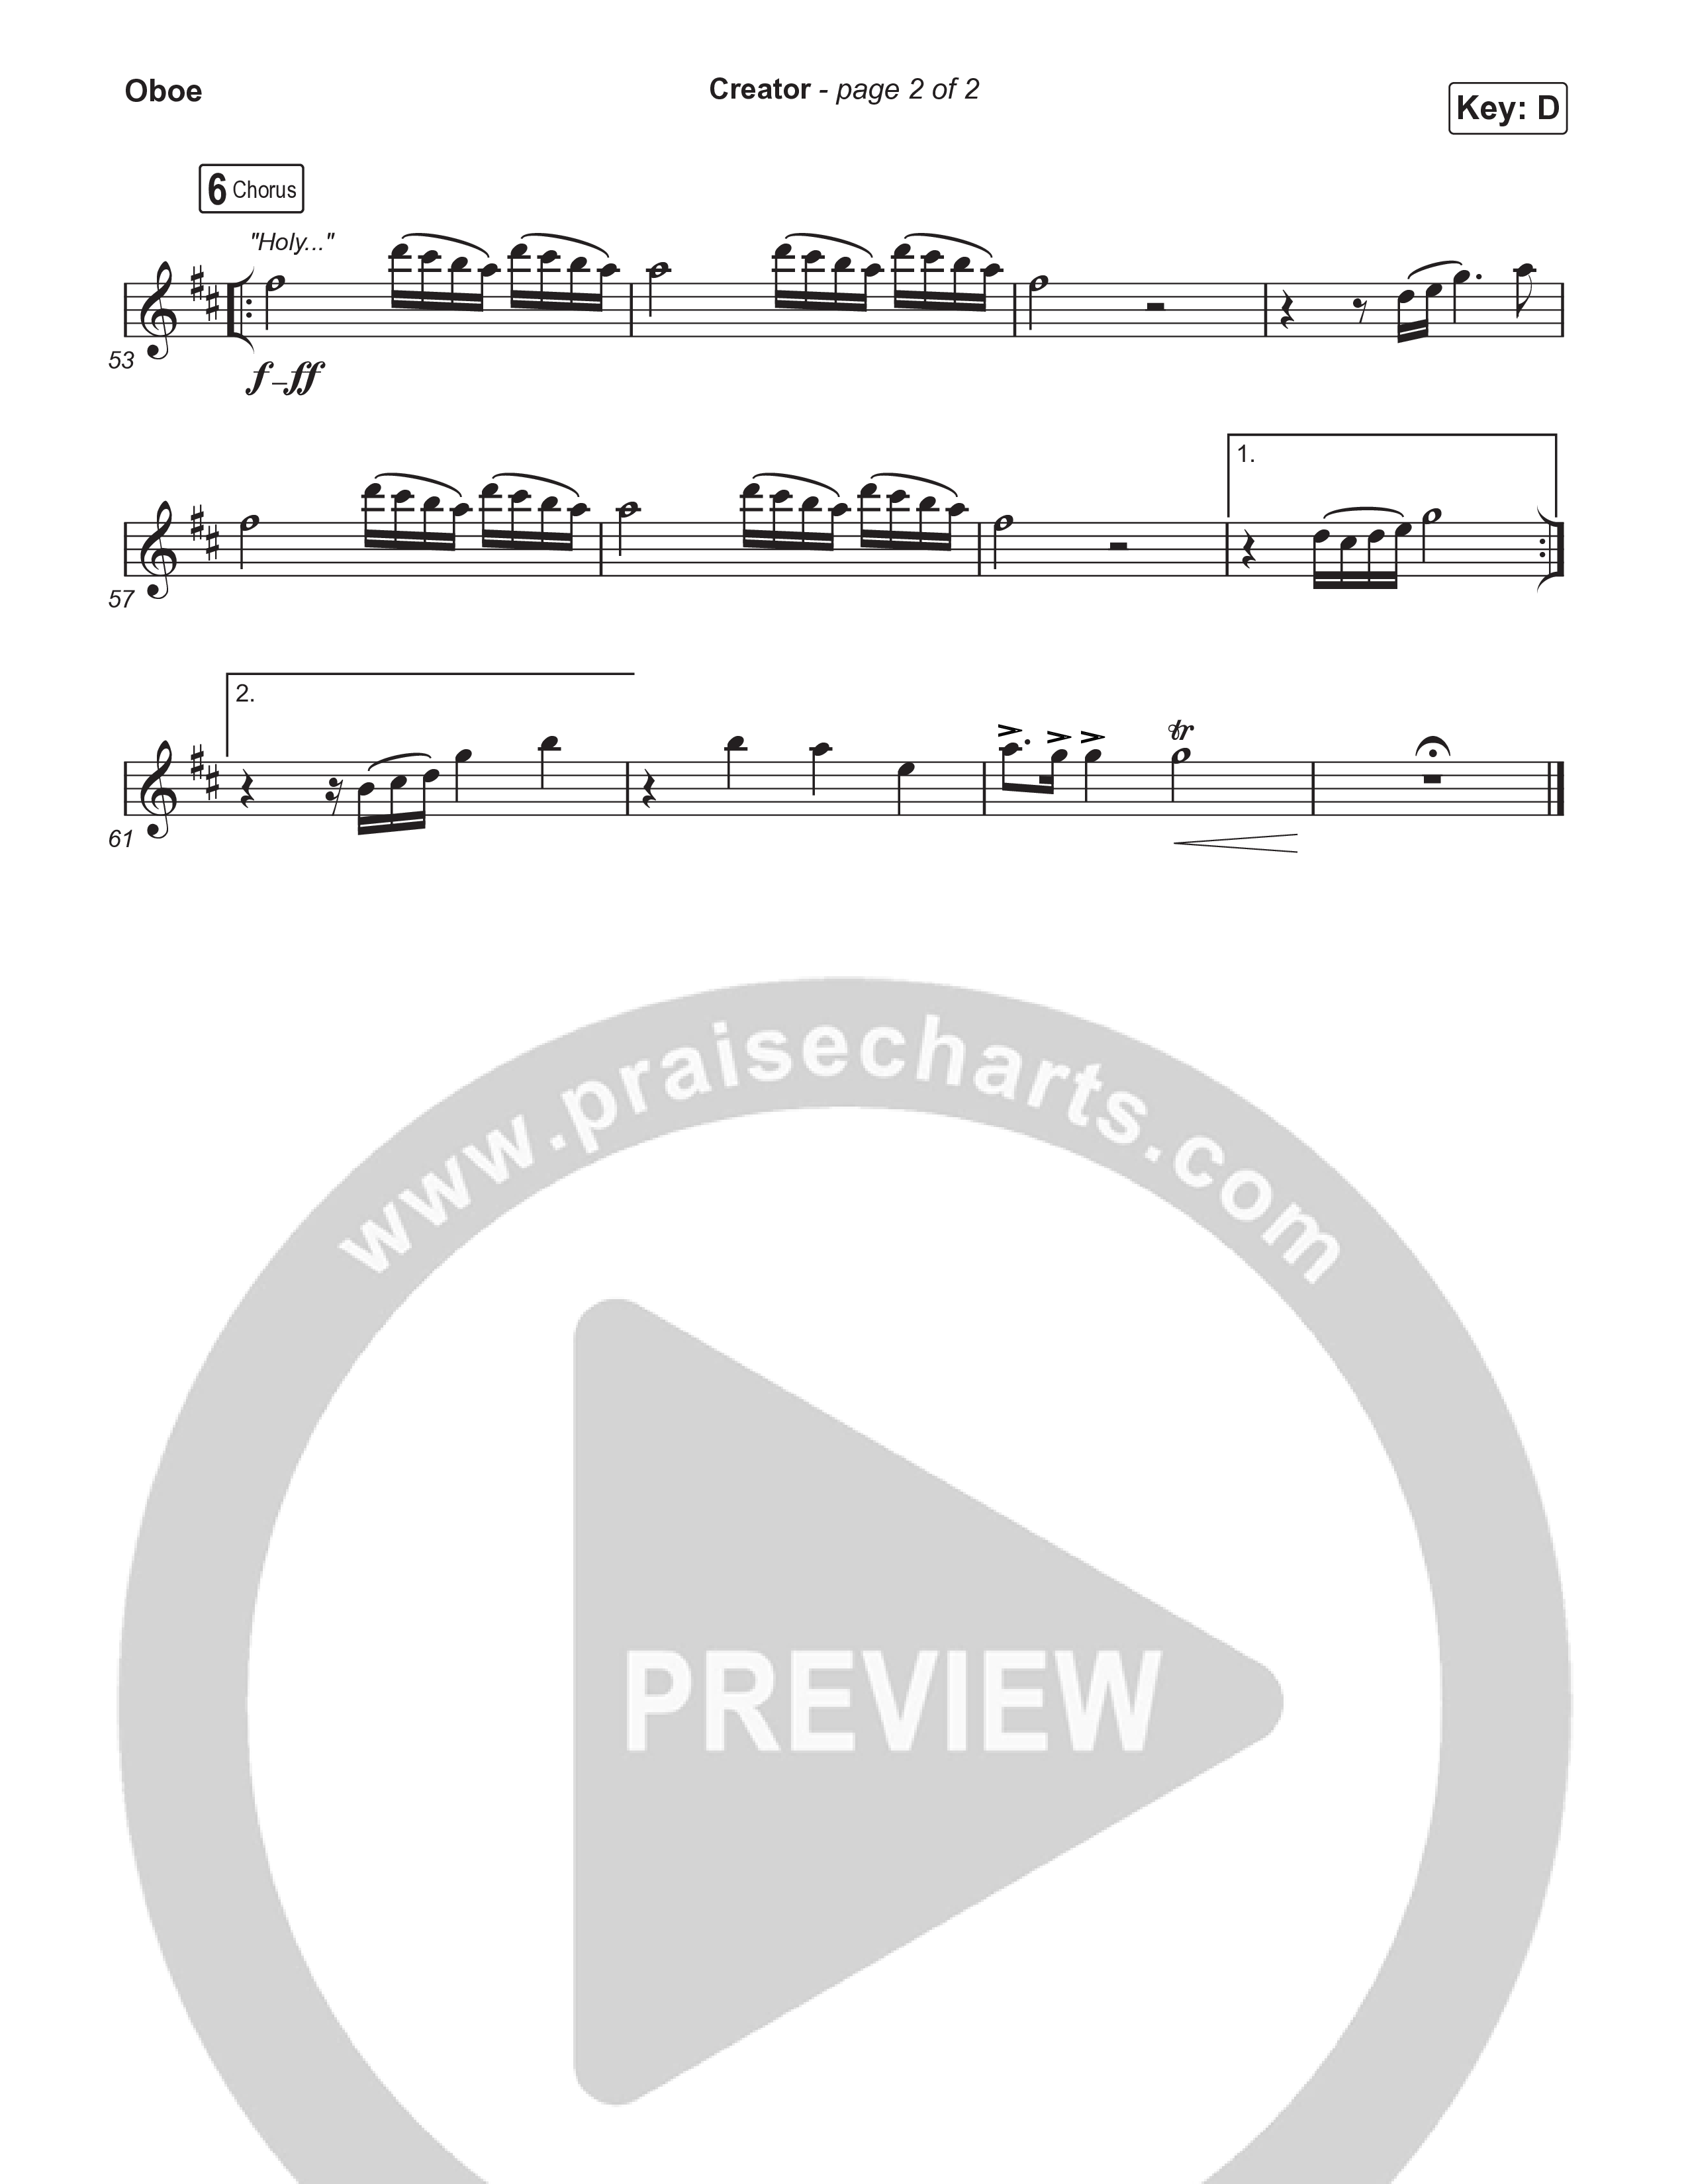 Creator (Choral Anthem SATB) Oboe (Phil Wickham / Arr. Mason Brown)